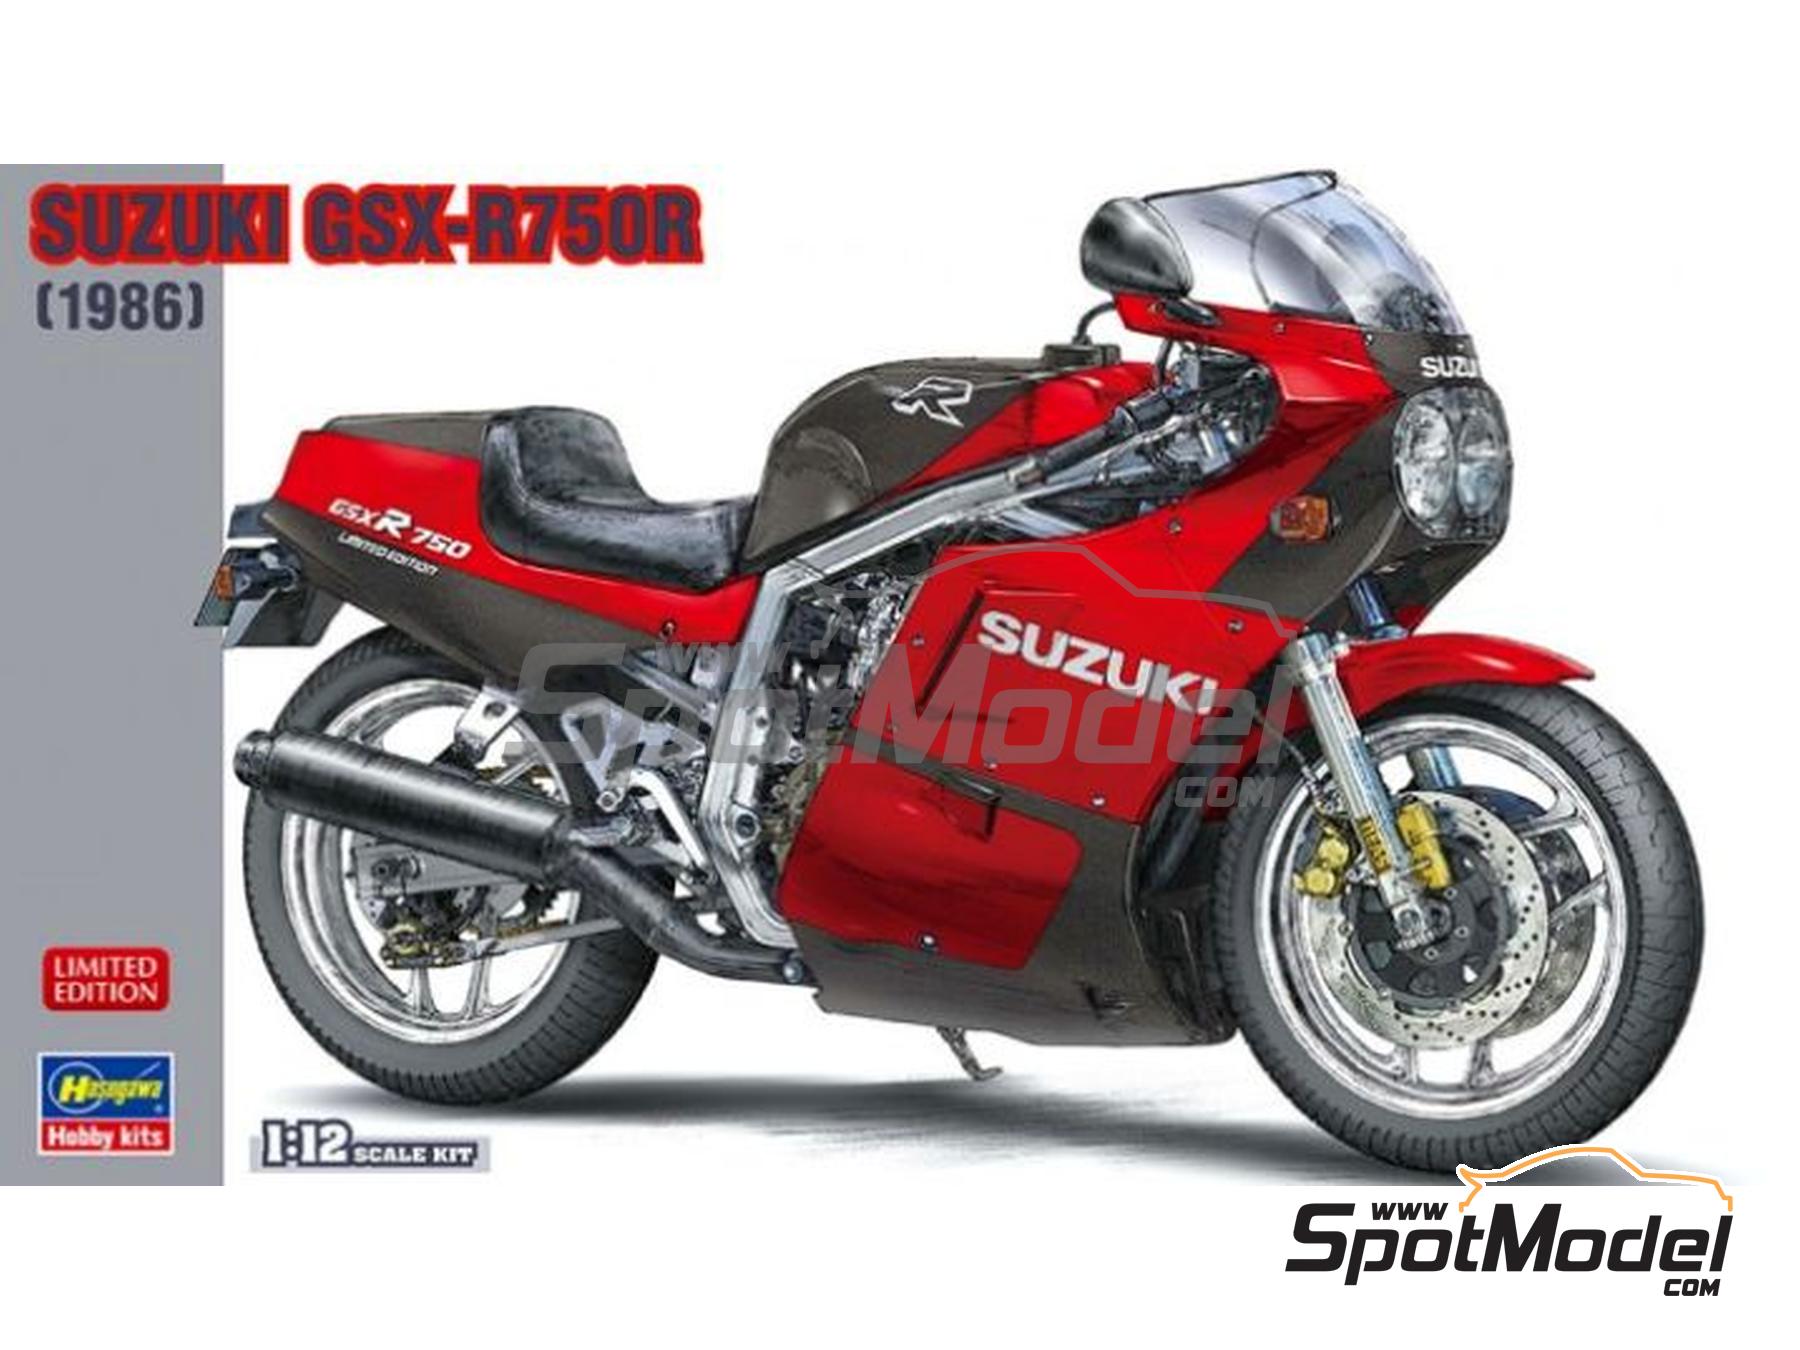 Hasegawa 21730 1:12 Suzuki GSX-R750R Motorcycle Plastic Model Kit 